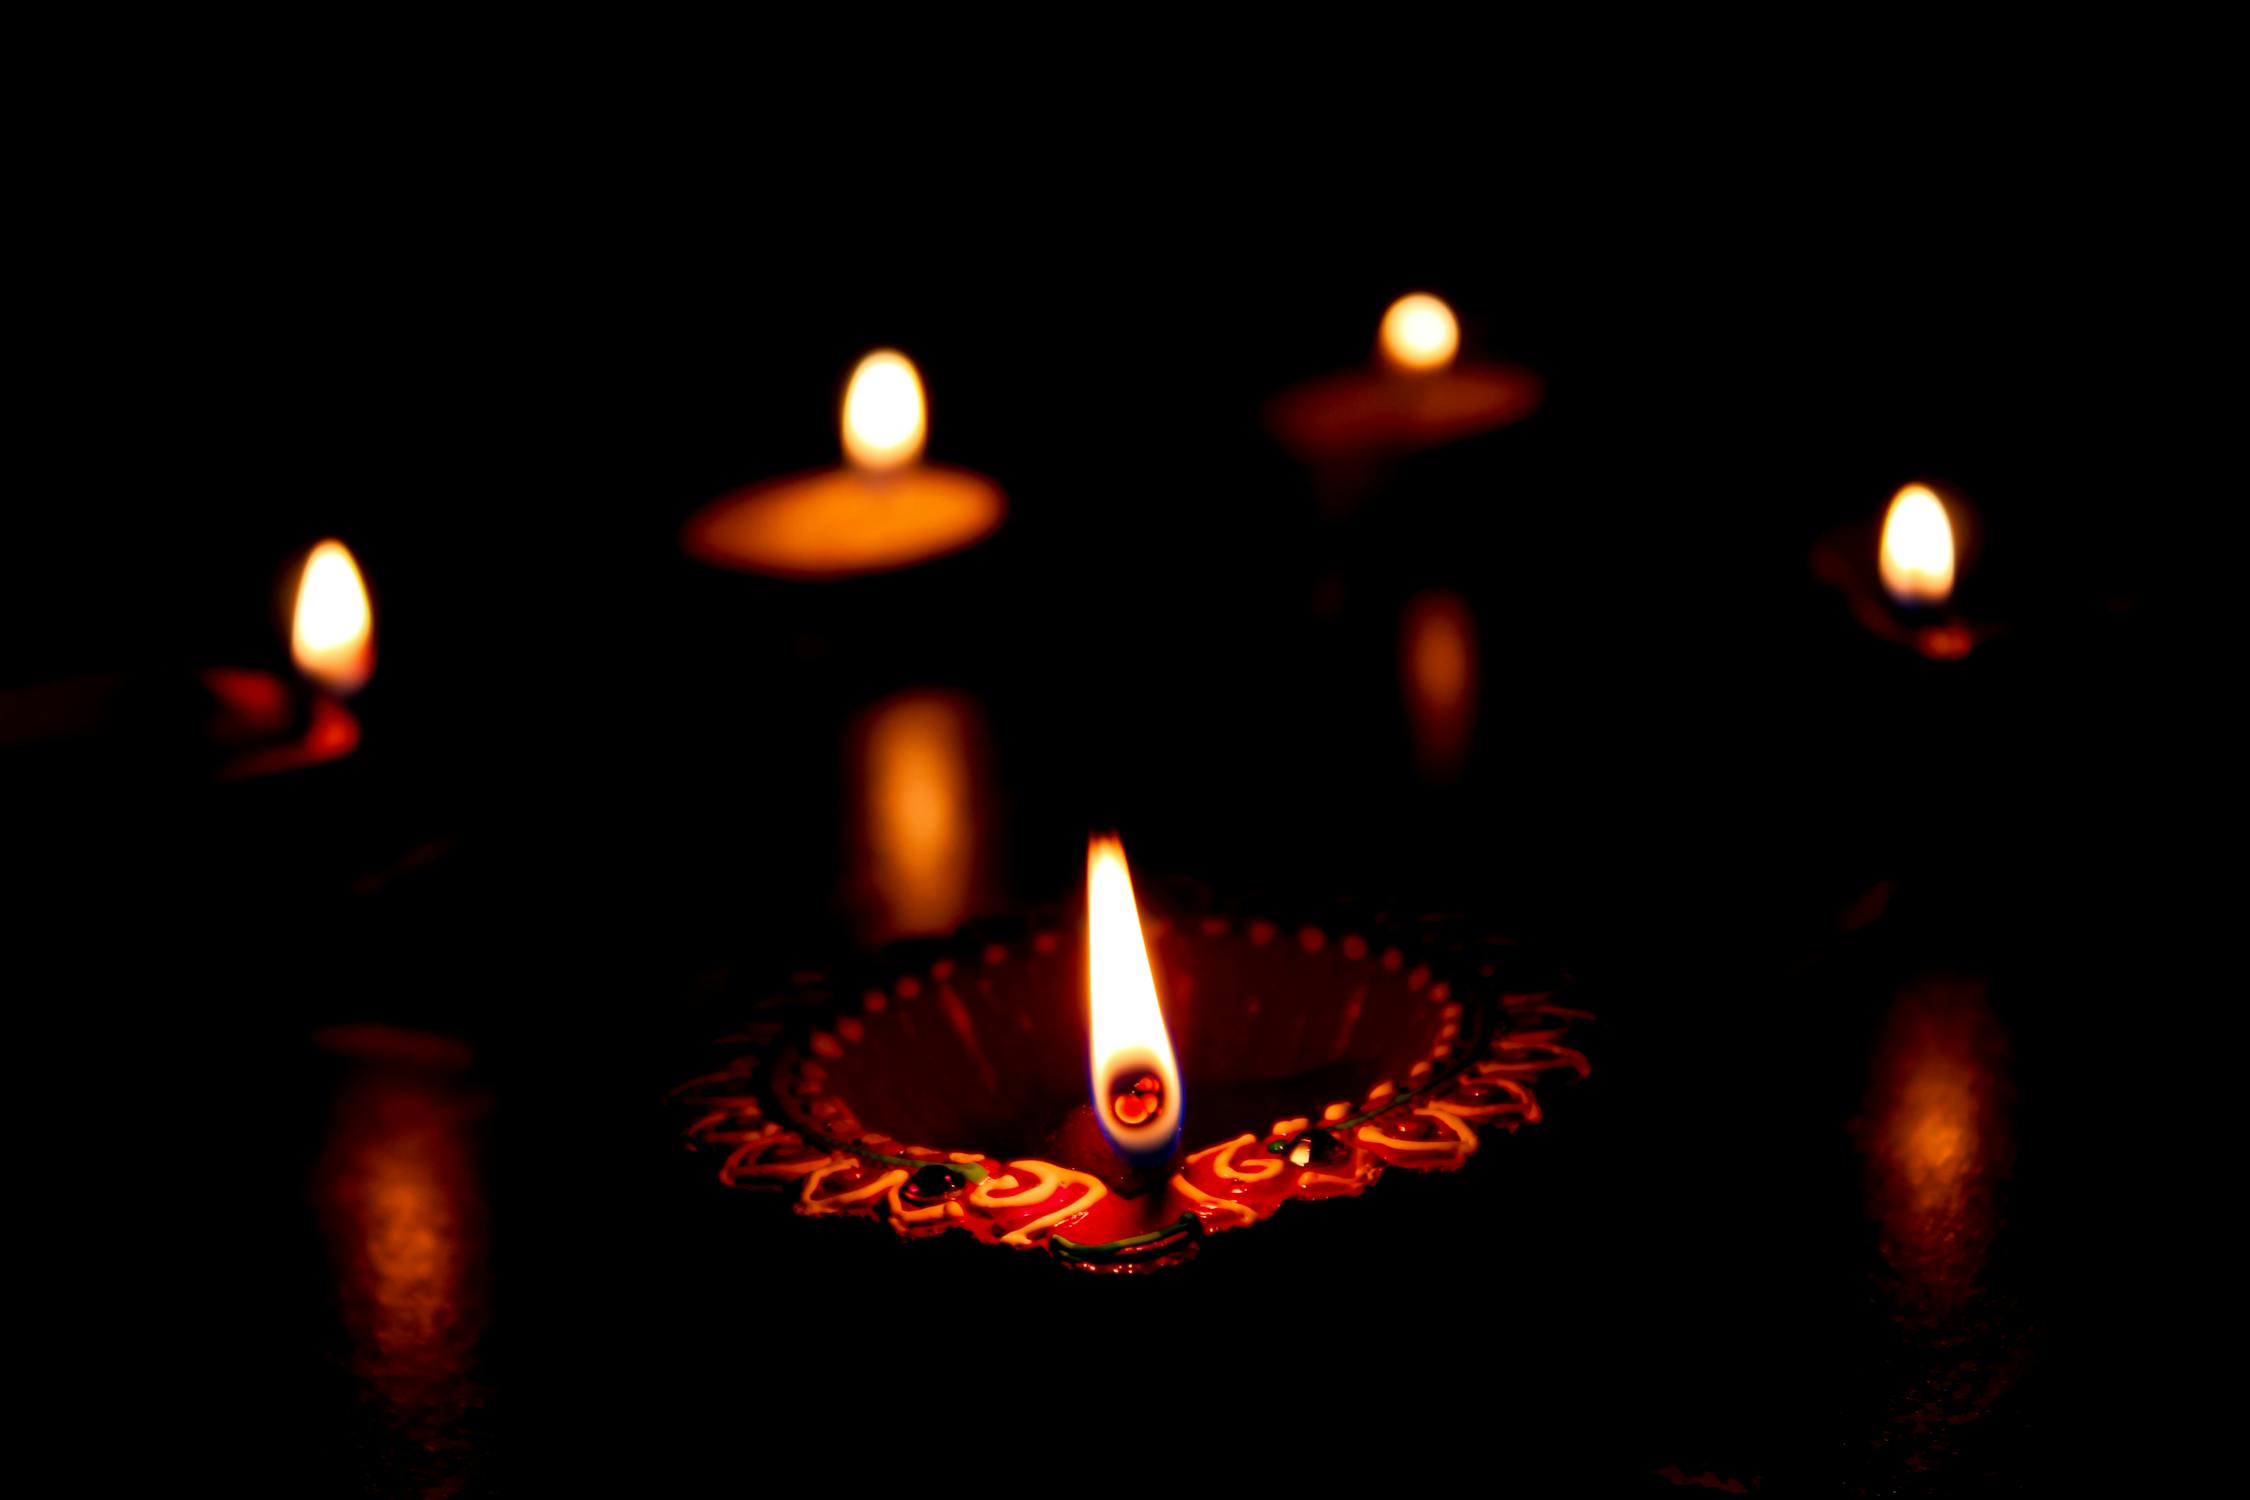 Diya in Diwali Photo by Ravi Roshan from Pexels: https://www.pexels.com/photo/lighted-candles-on-dark-background-5861723/